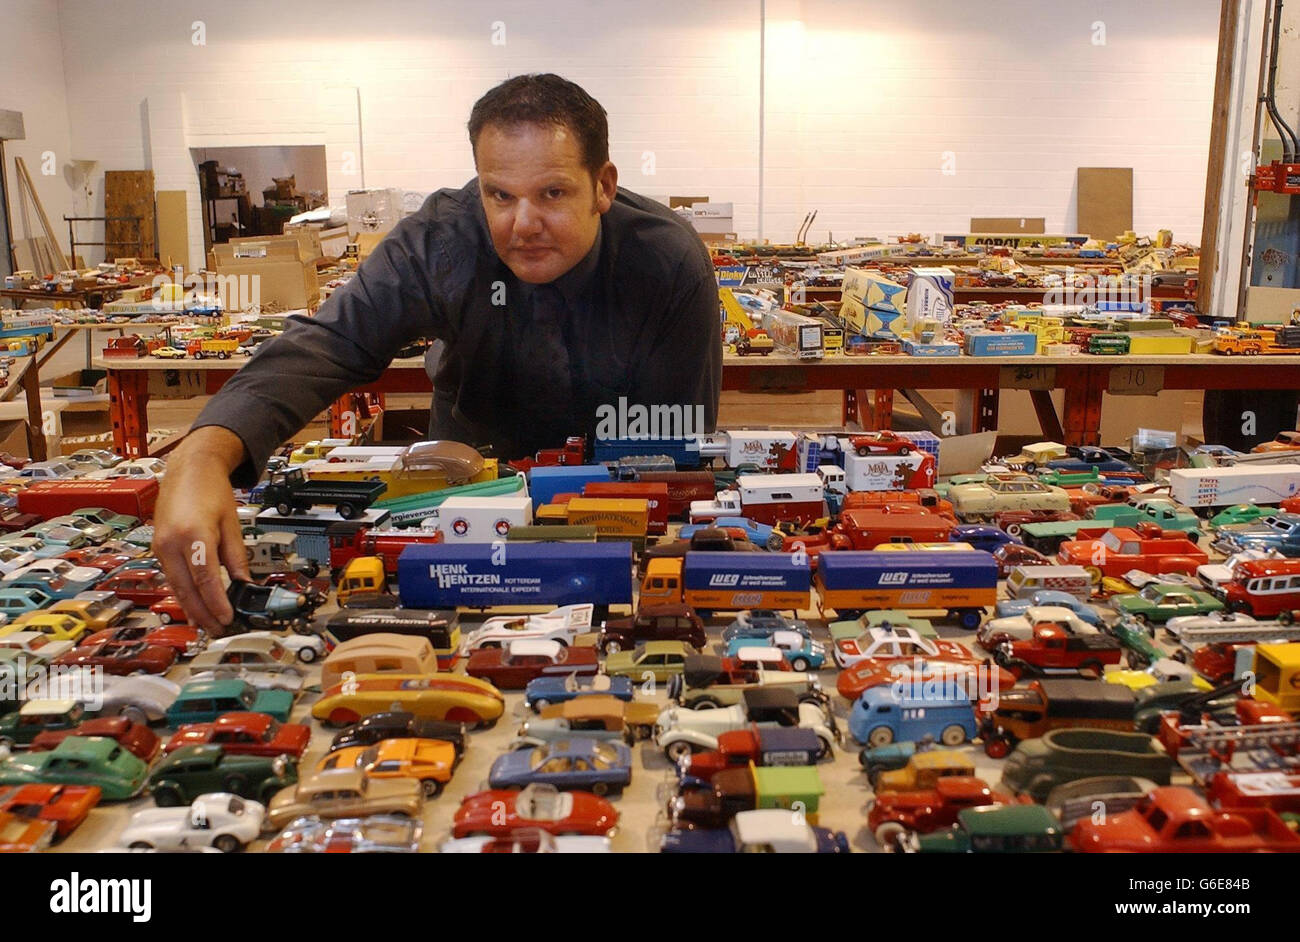 Toy car sale Stock Photo